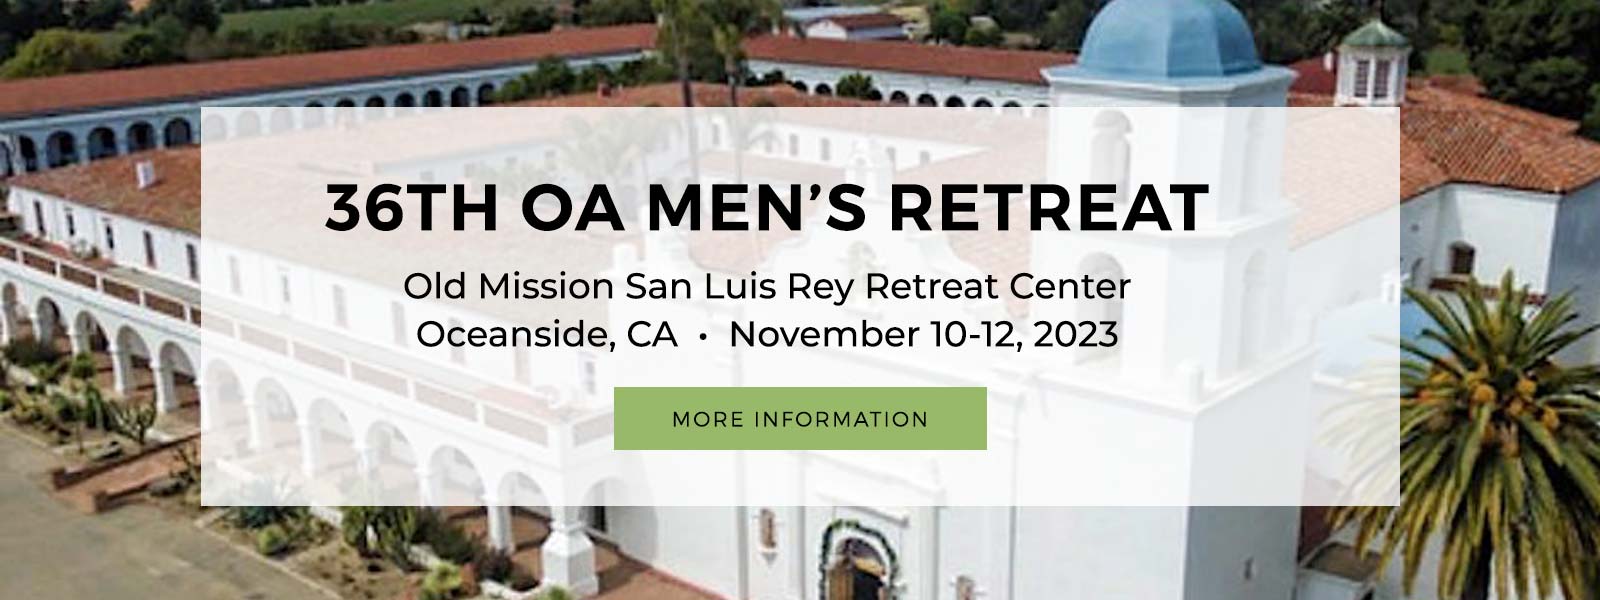 36th OA Men's Retreat. Old Mission San Luis Rey Retreat Center in Oceanside, CA. November 10-12, 2023. Click for more information.